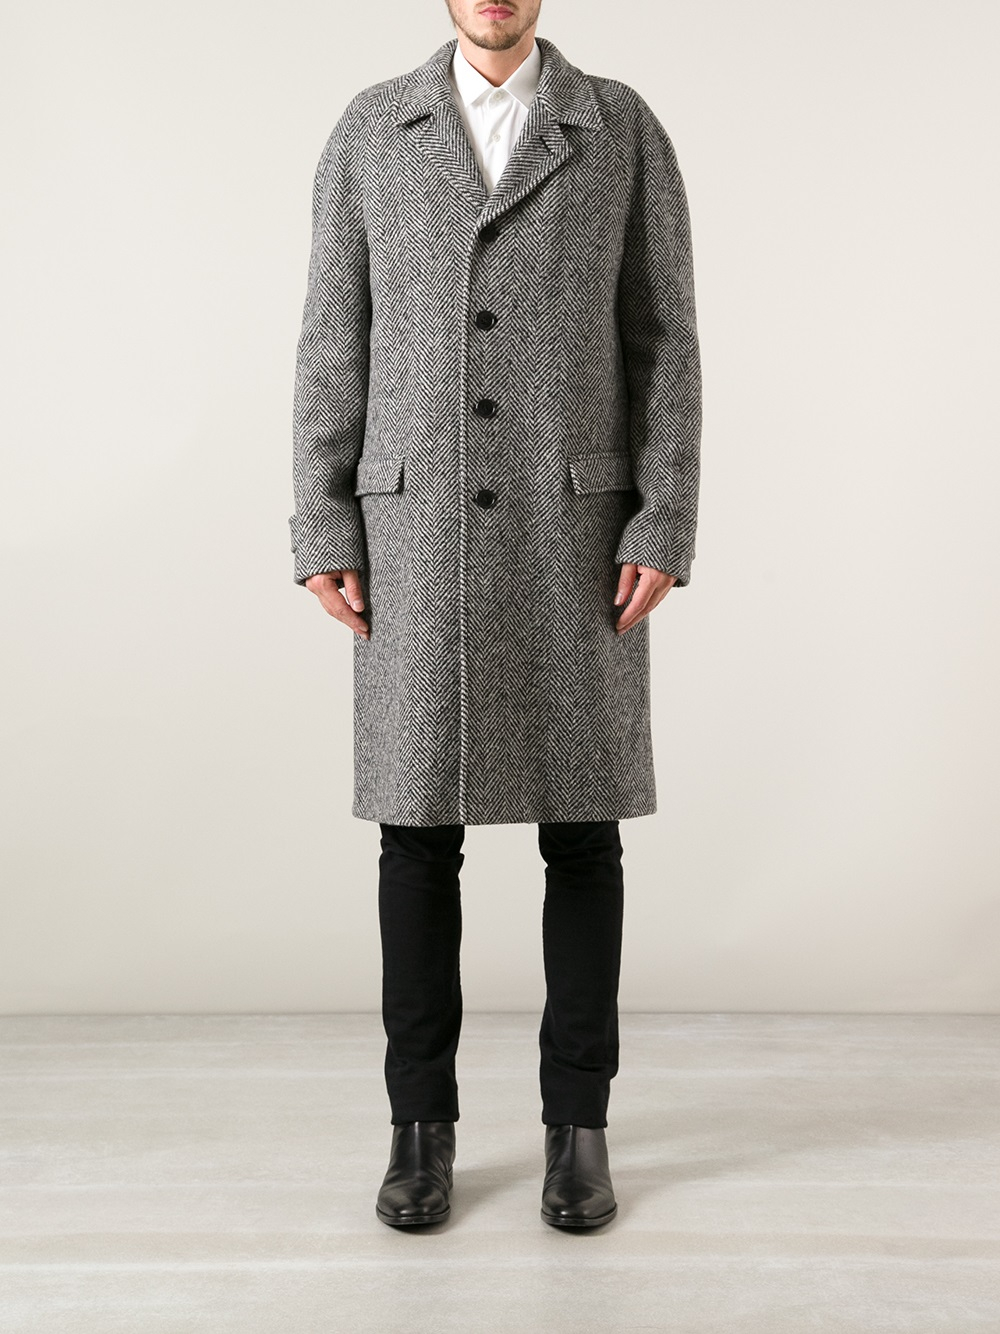 Lyst - Saint Laurent Herringbone Boxy Overcoat in Gray for Men